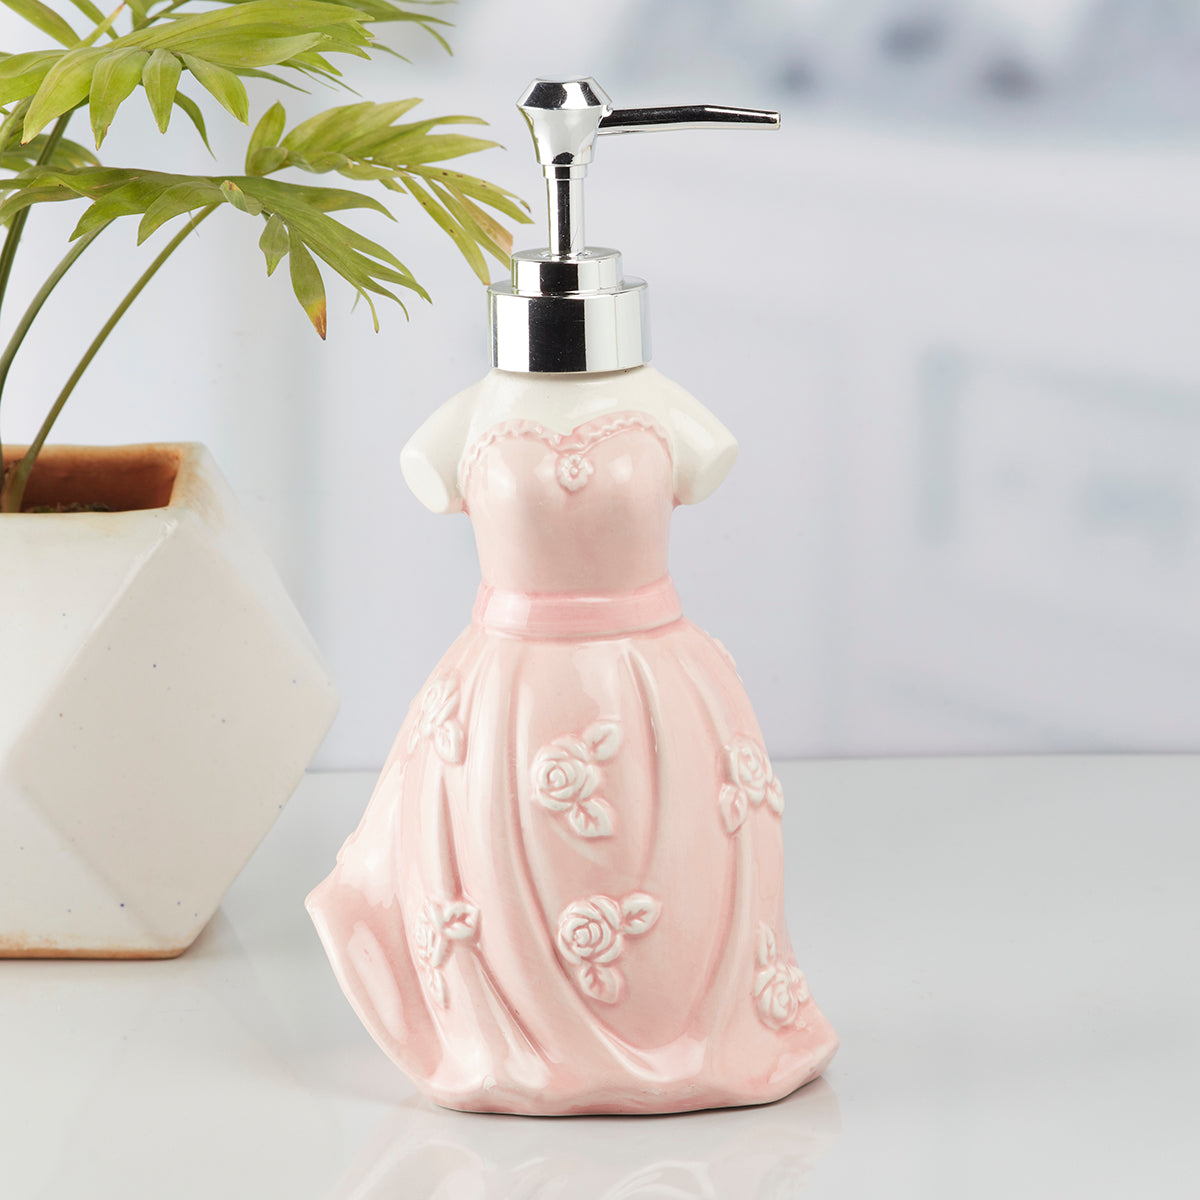 Ceramic Soap Dispenser handwash Pump for Bathroom, Set of 1, Pink (10160)